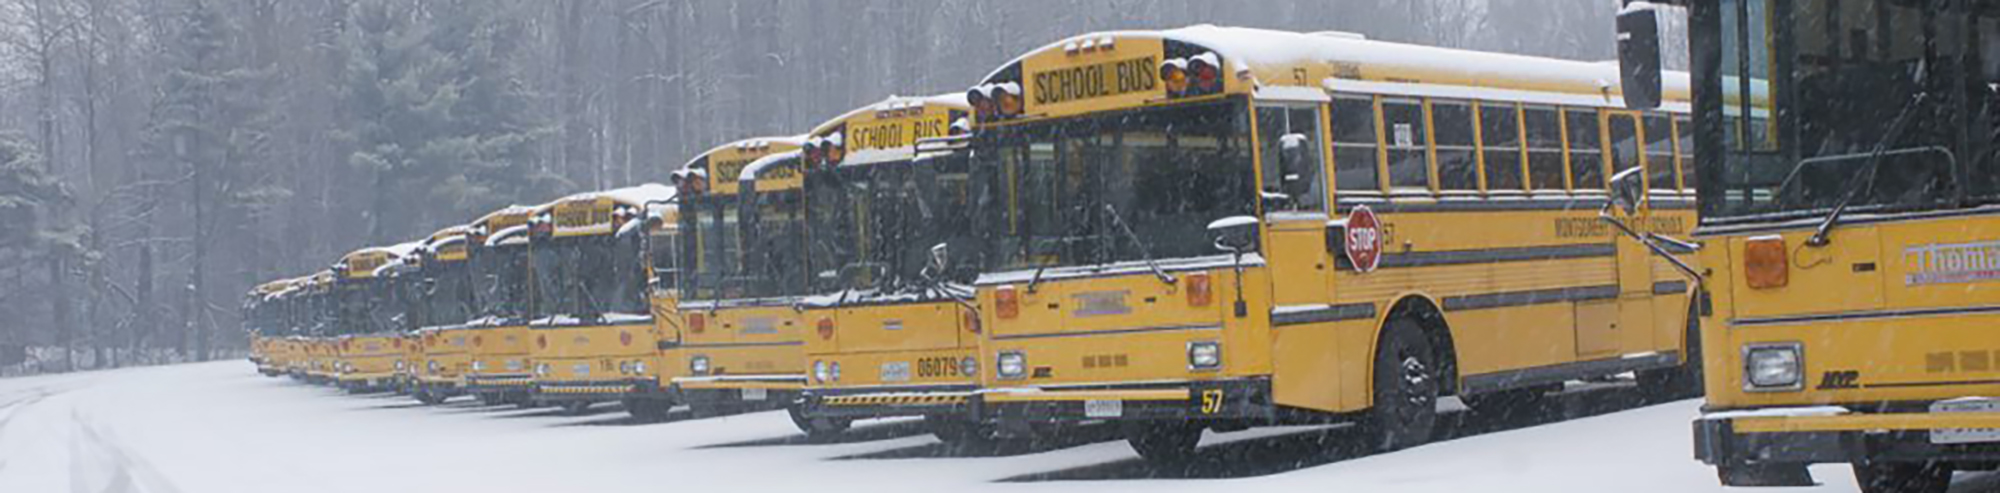 school busses in snow banner